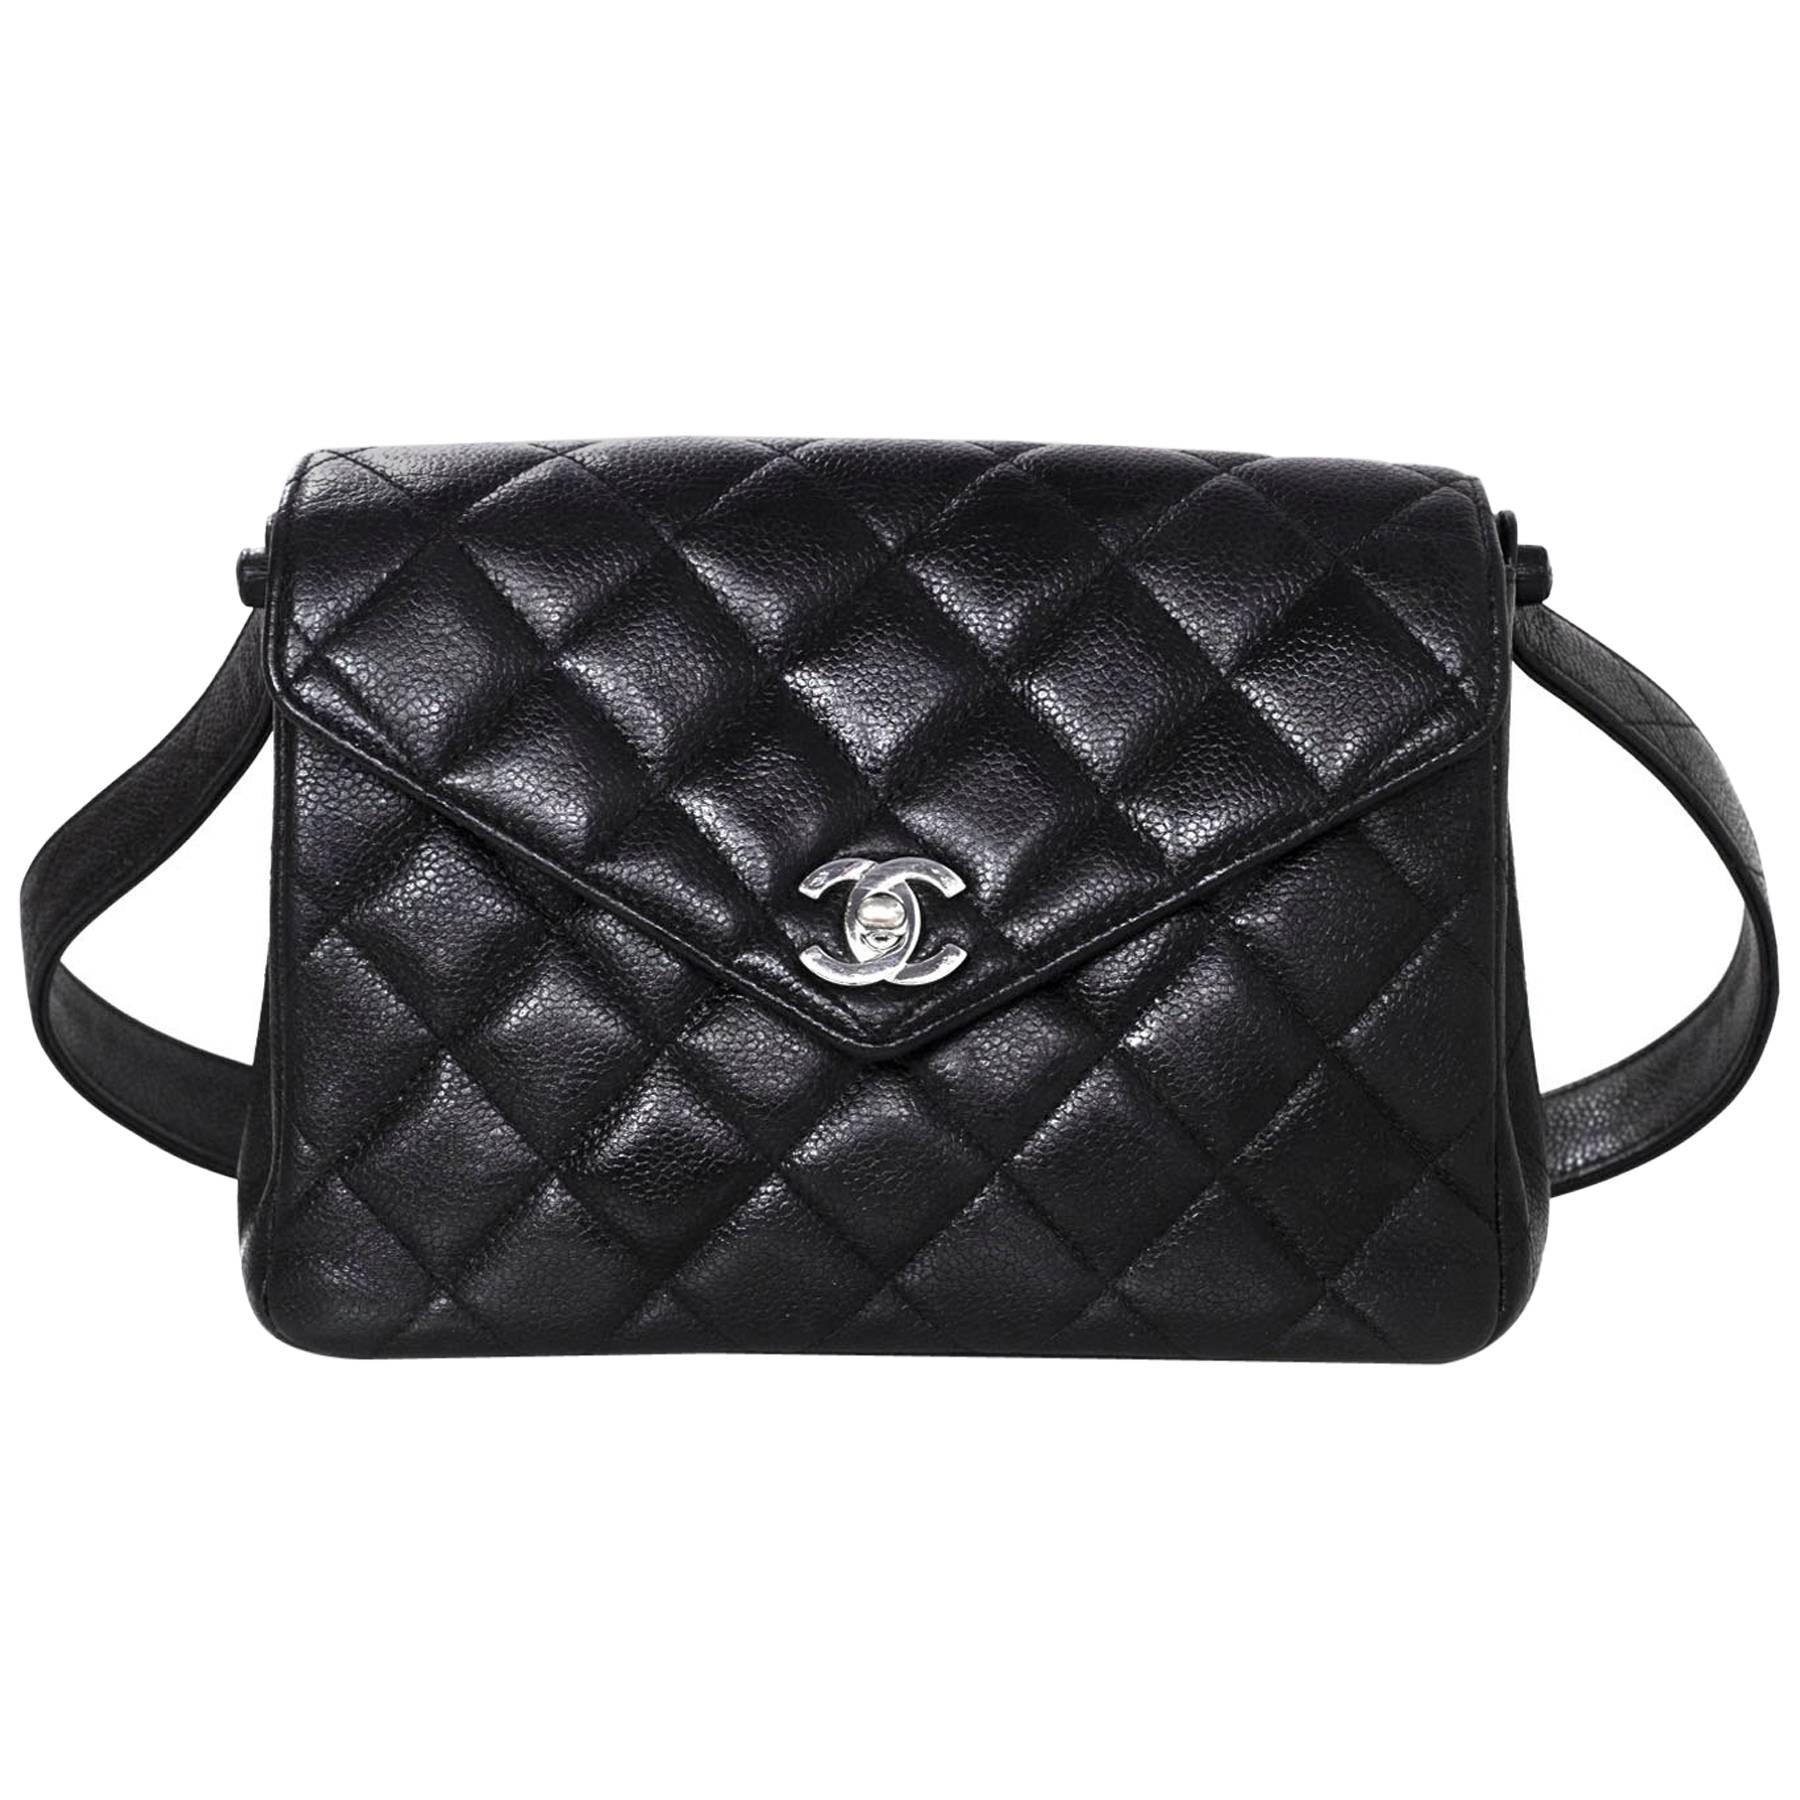 Chanel Black Quilted Caviar Leather Shoulder Bag